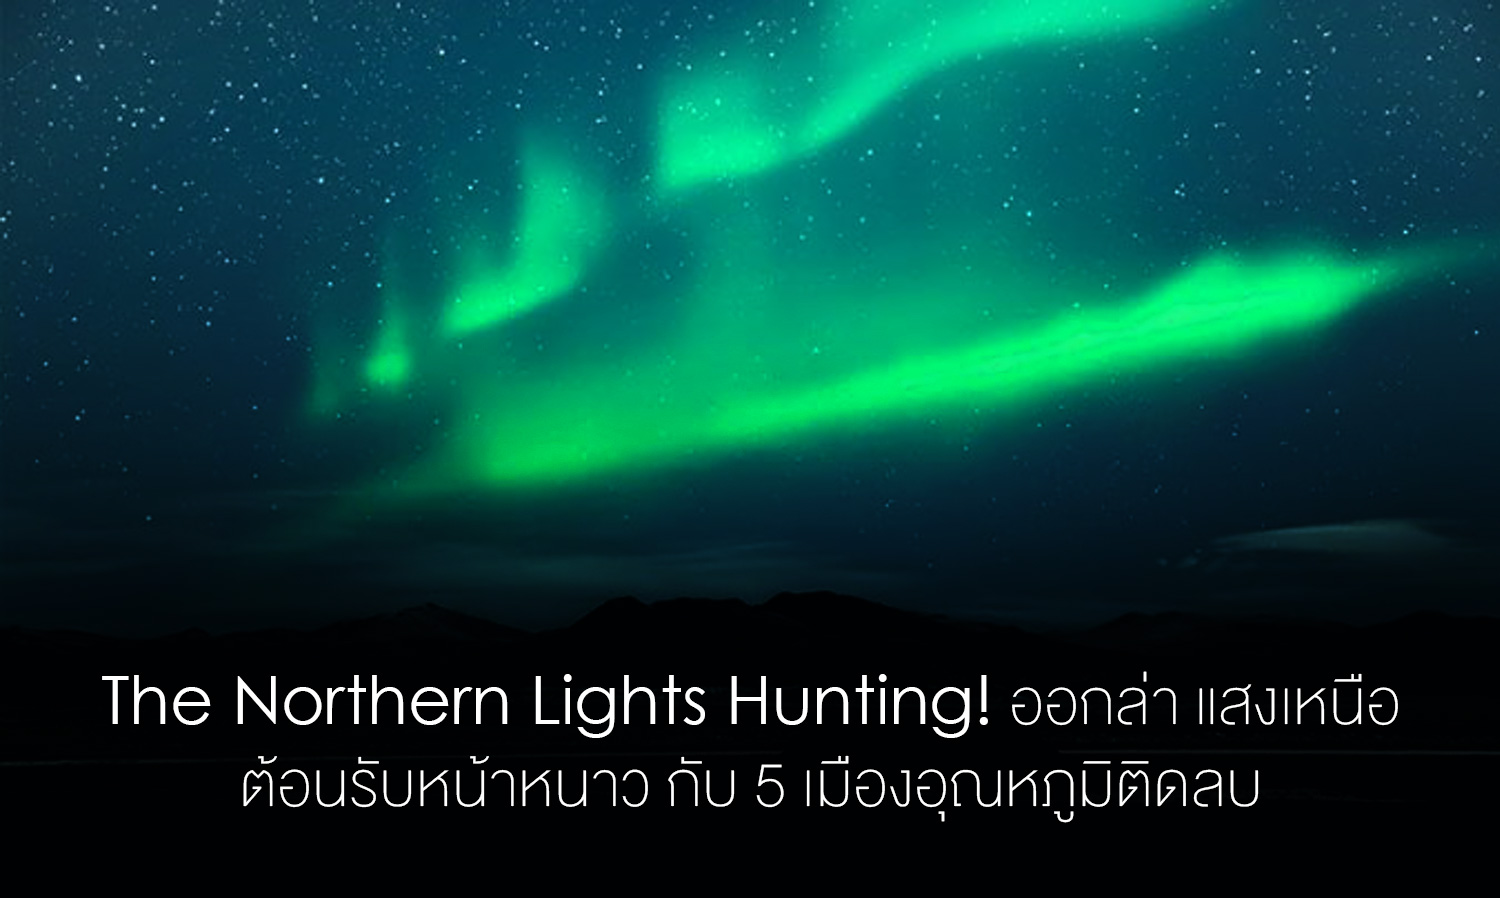 The Northern Lights Hunting! ออกล่า แสงเหนือ ต้อนรับหน้าหนาว กับ 5 เมืองอุณหภูมิติดลบ